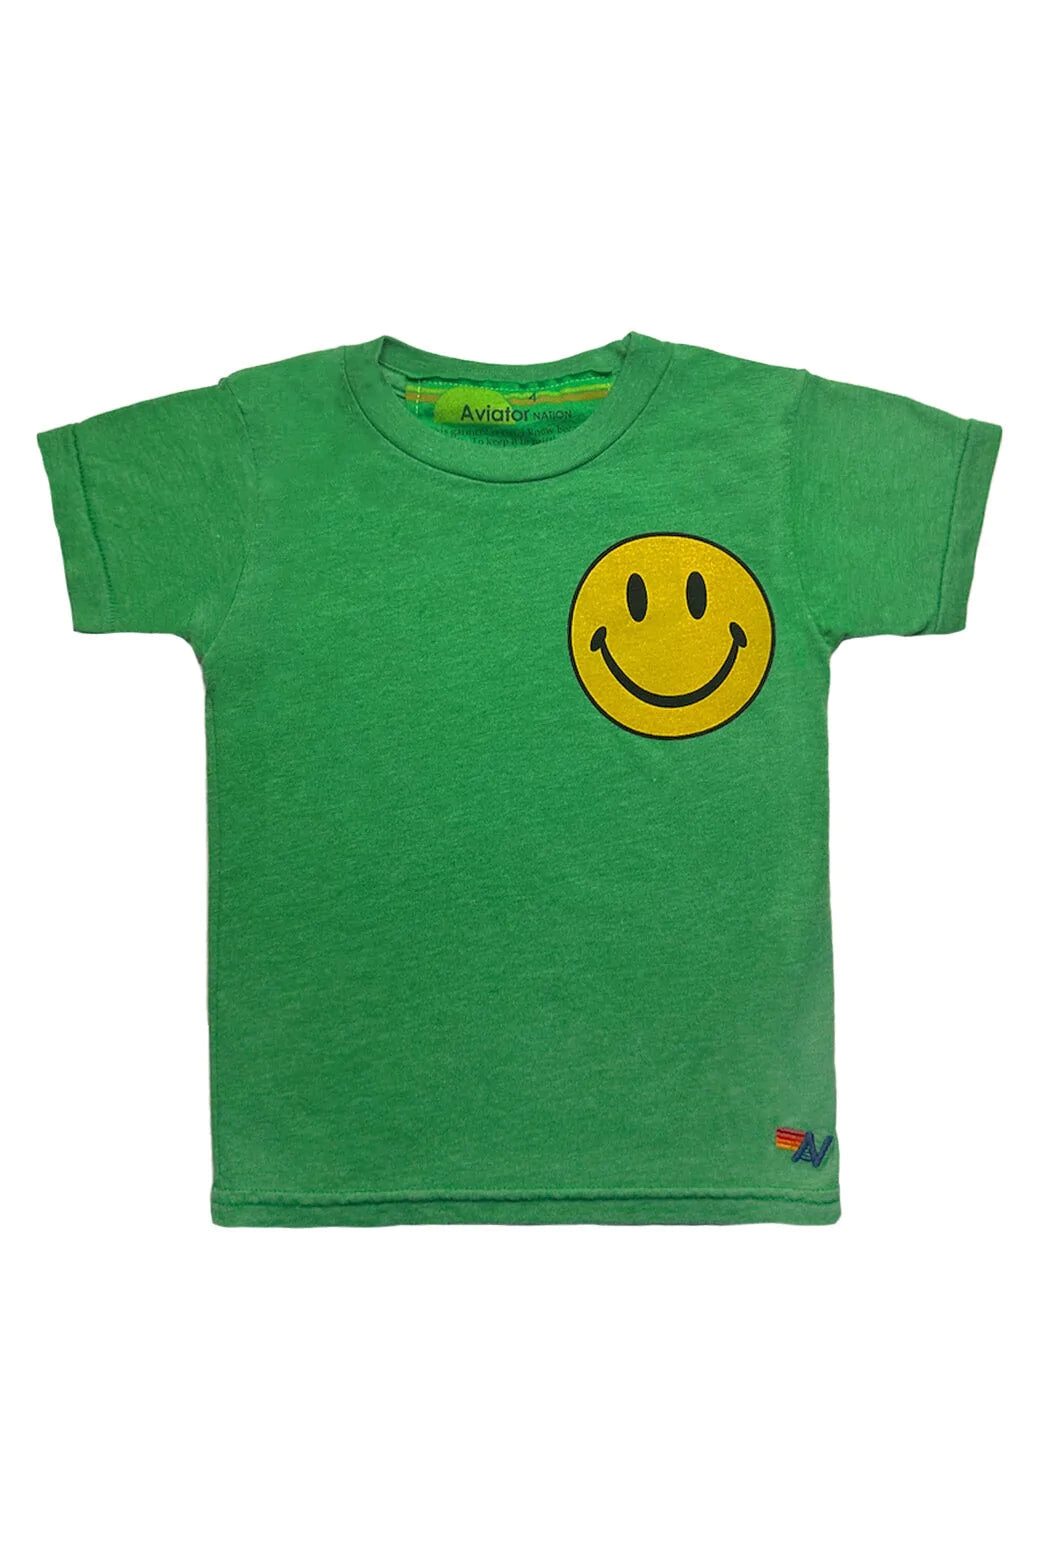 AVIATOR NATION KID'S SMILEY 2 TEE - KELLY GREEN